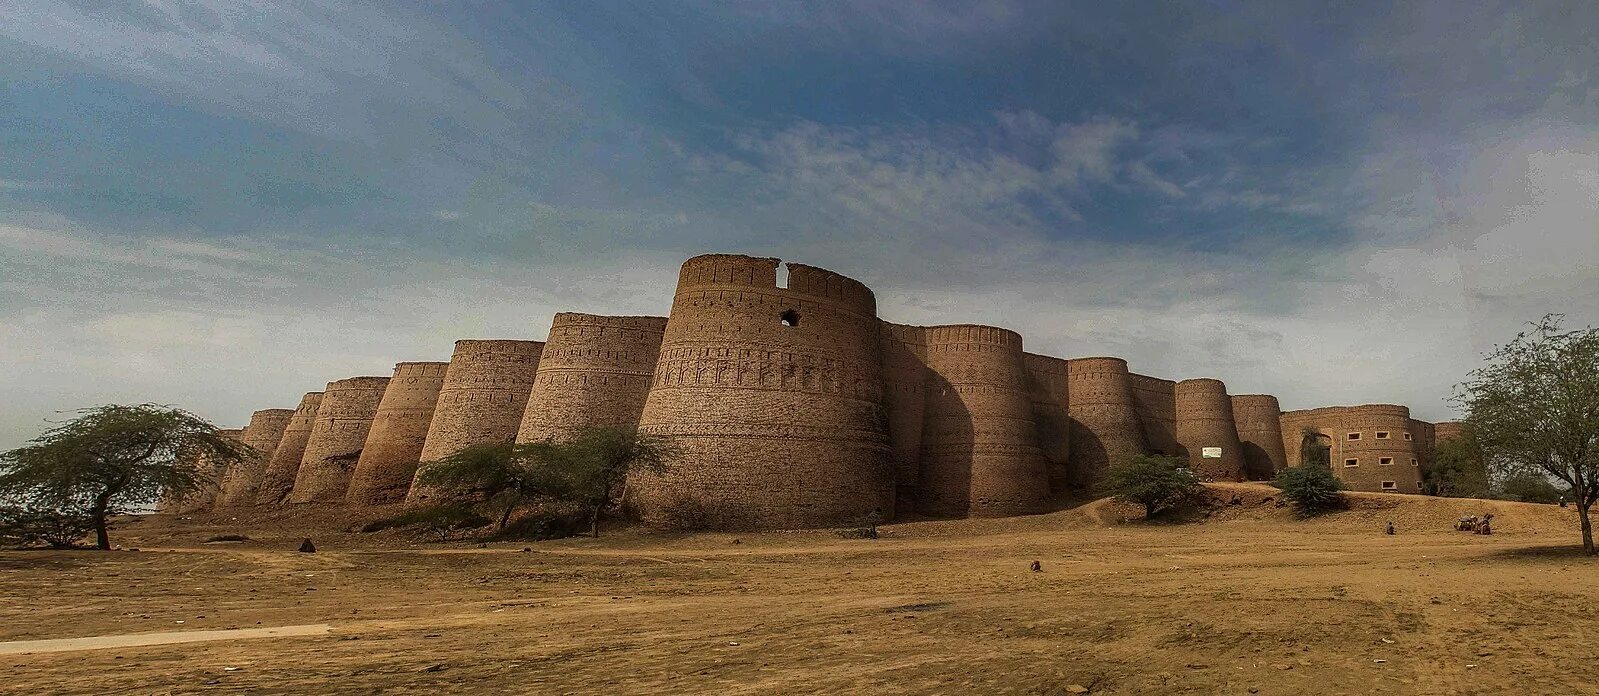 Форт Деравар Пакистан. Форт Бхангар Индия. Пустыня Чолистан в Пакистане. Форт Девагири-Даулатабад.